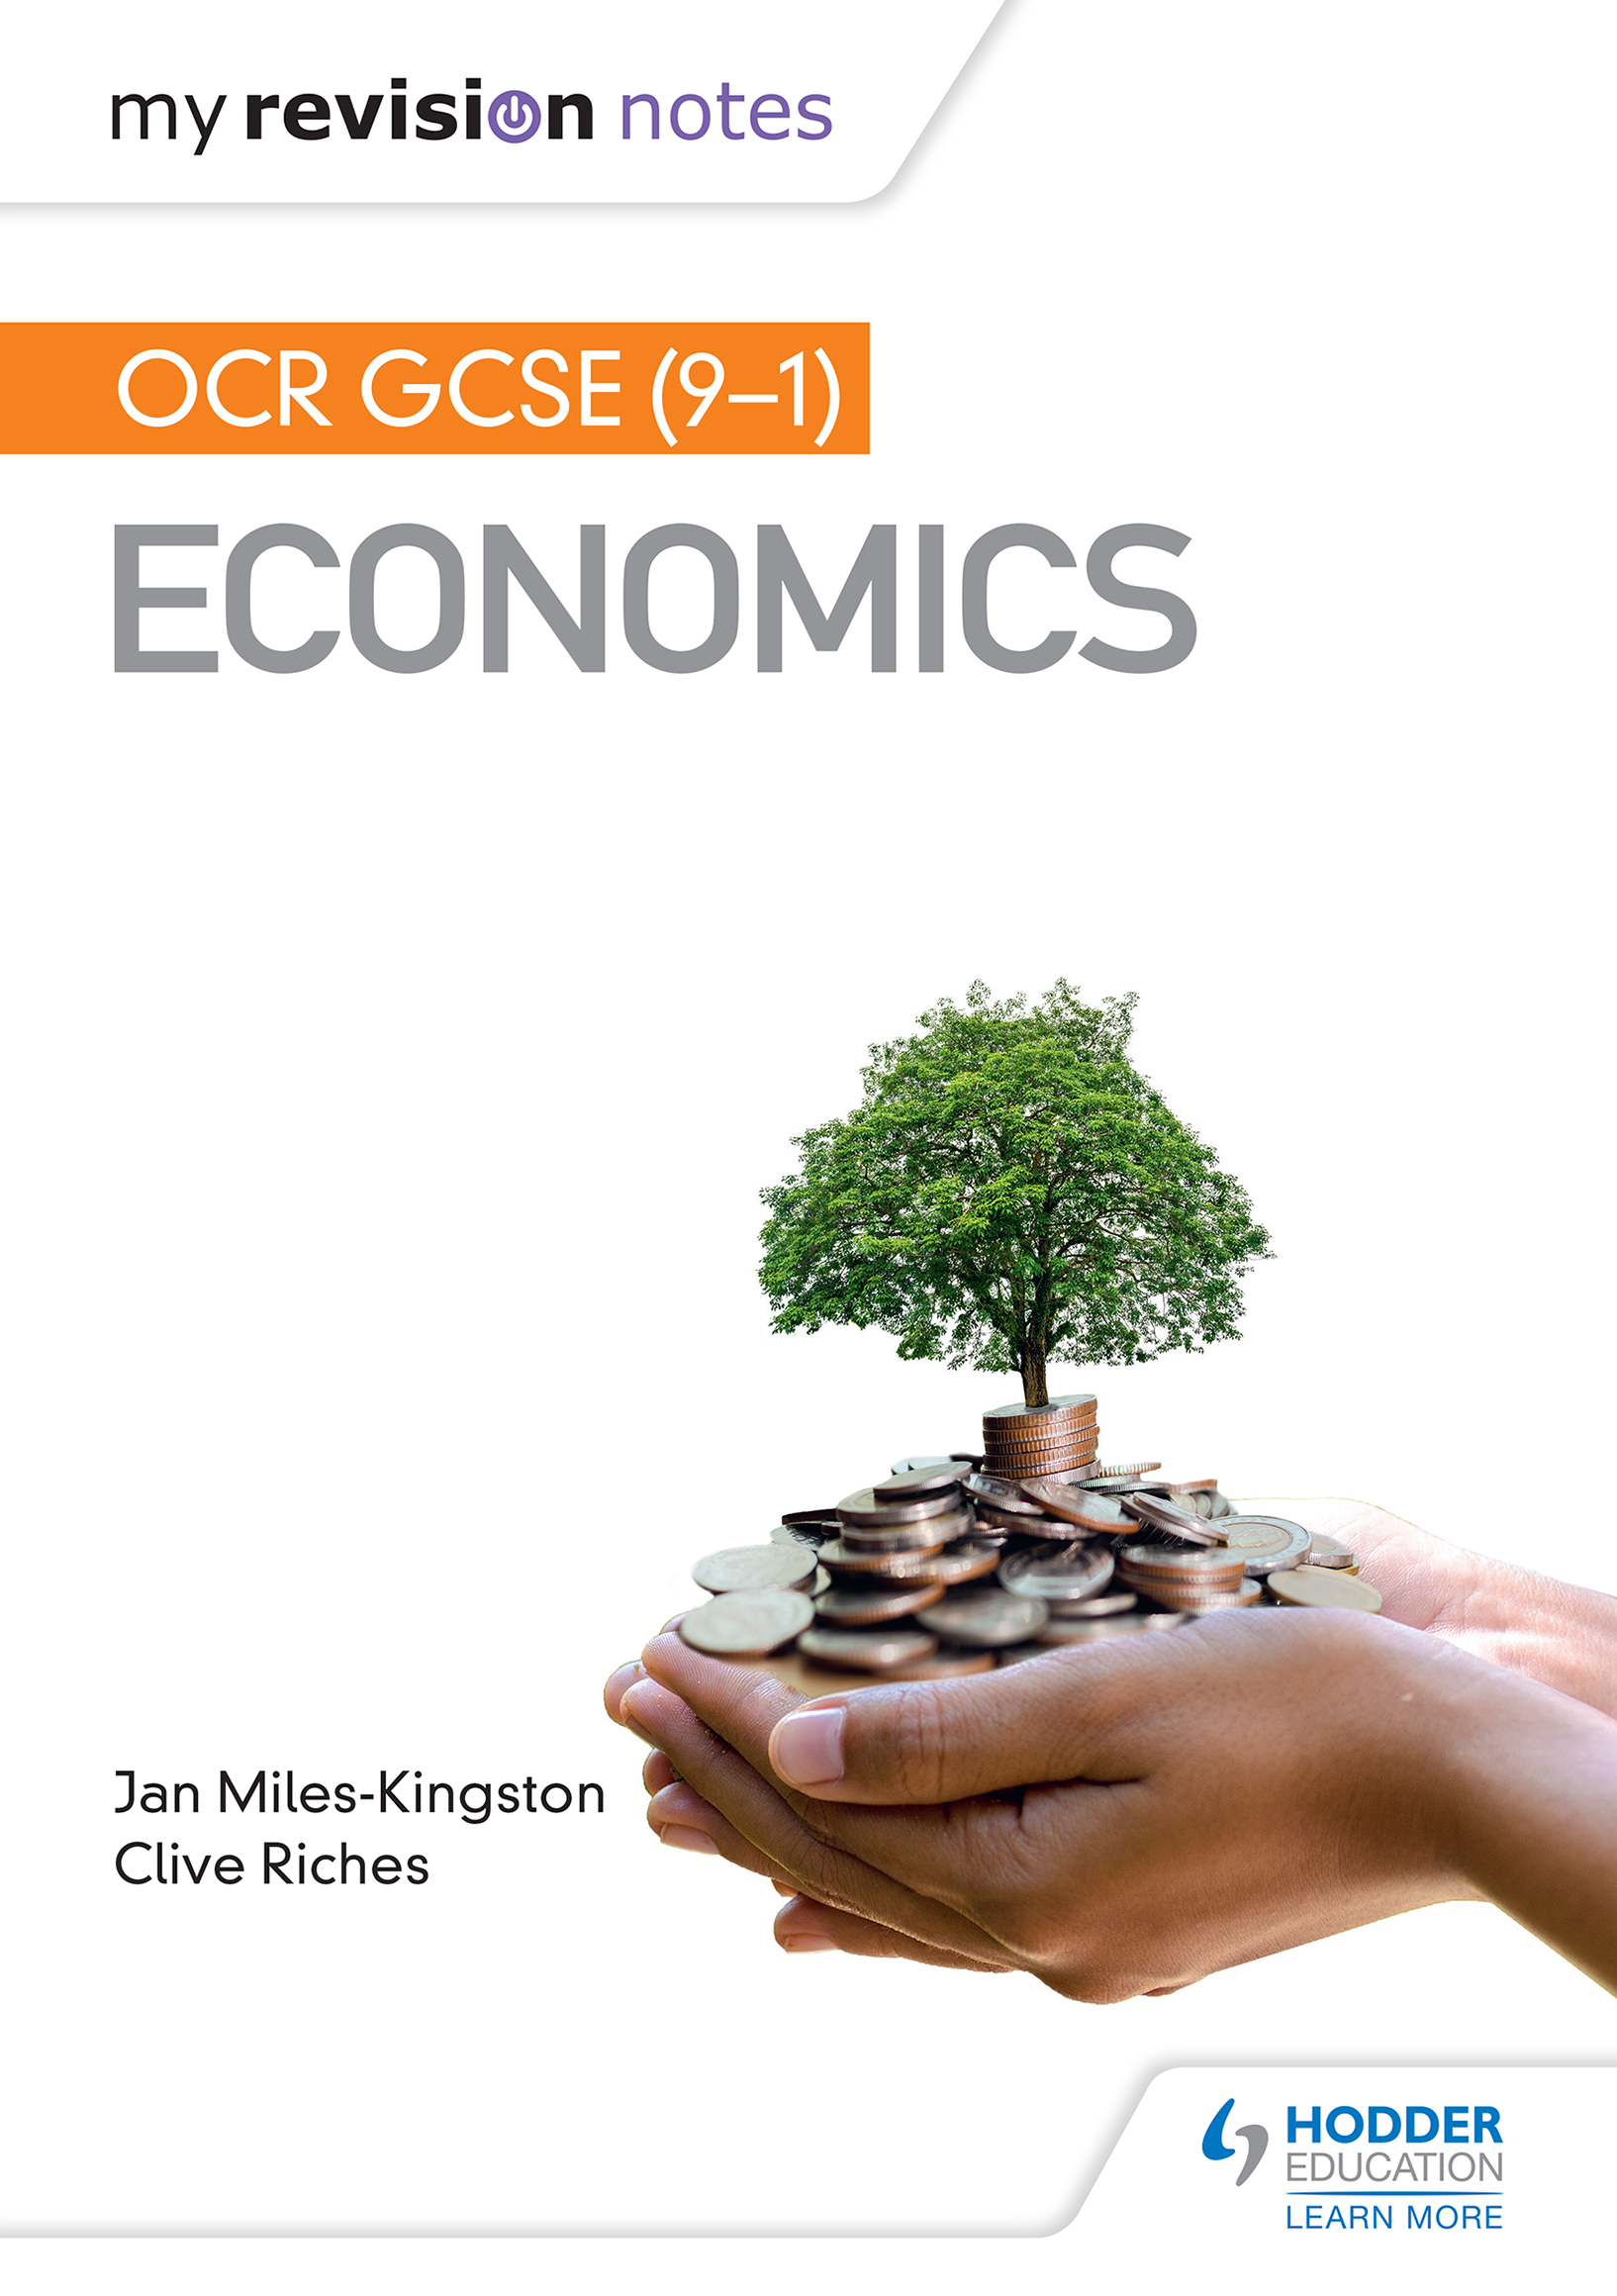 My Revision Notes: OCR GCSE (9-1) Economics